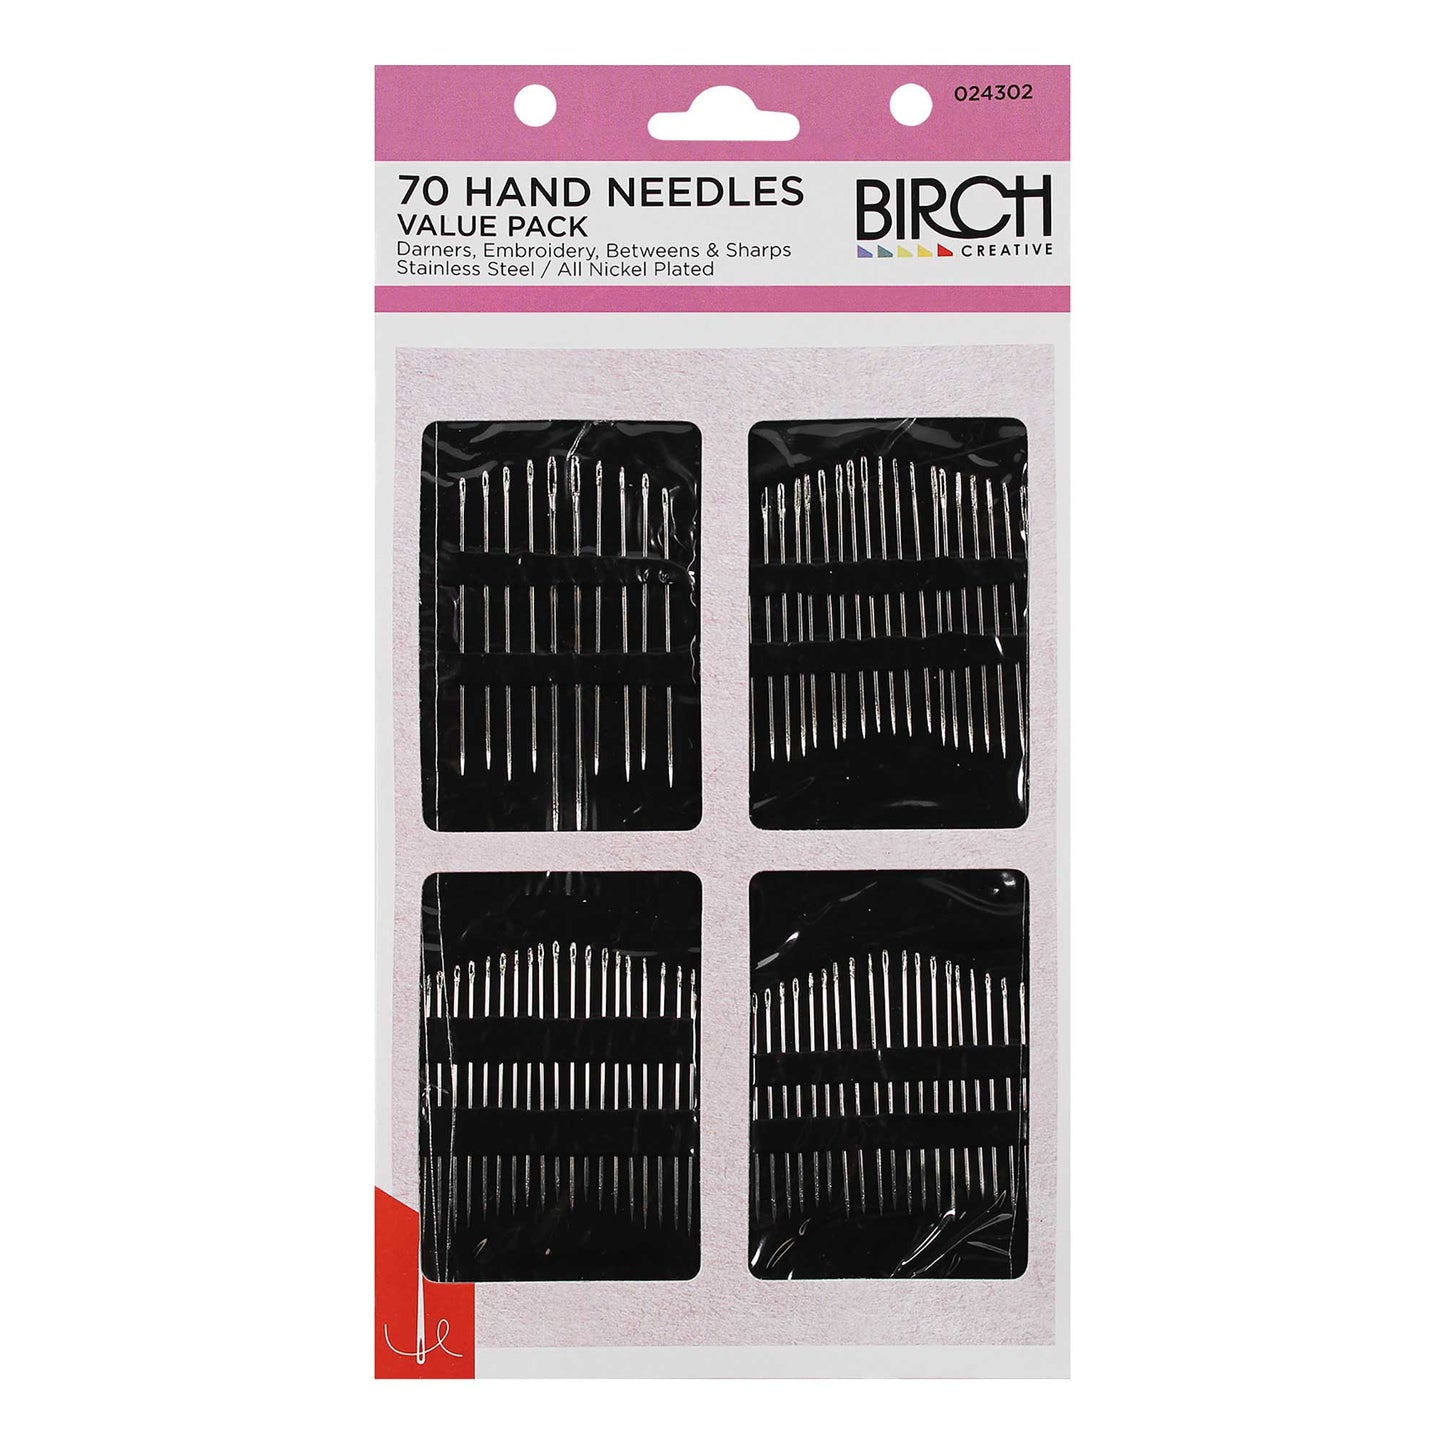 Birch 70 Needles Pack (024302)